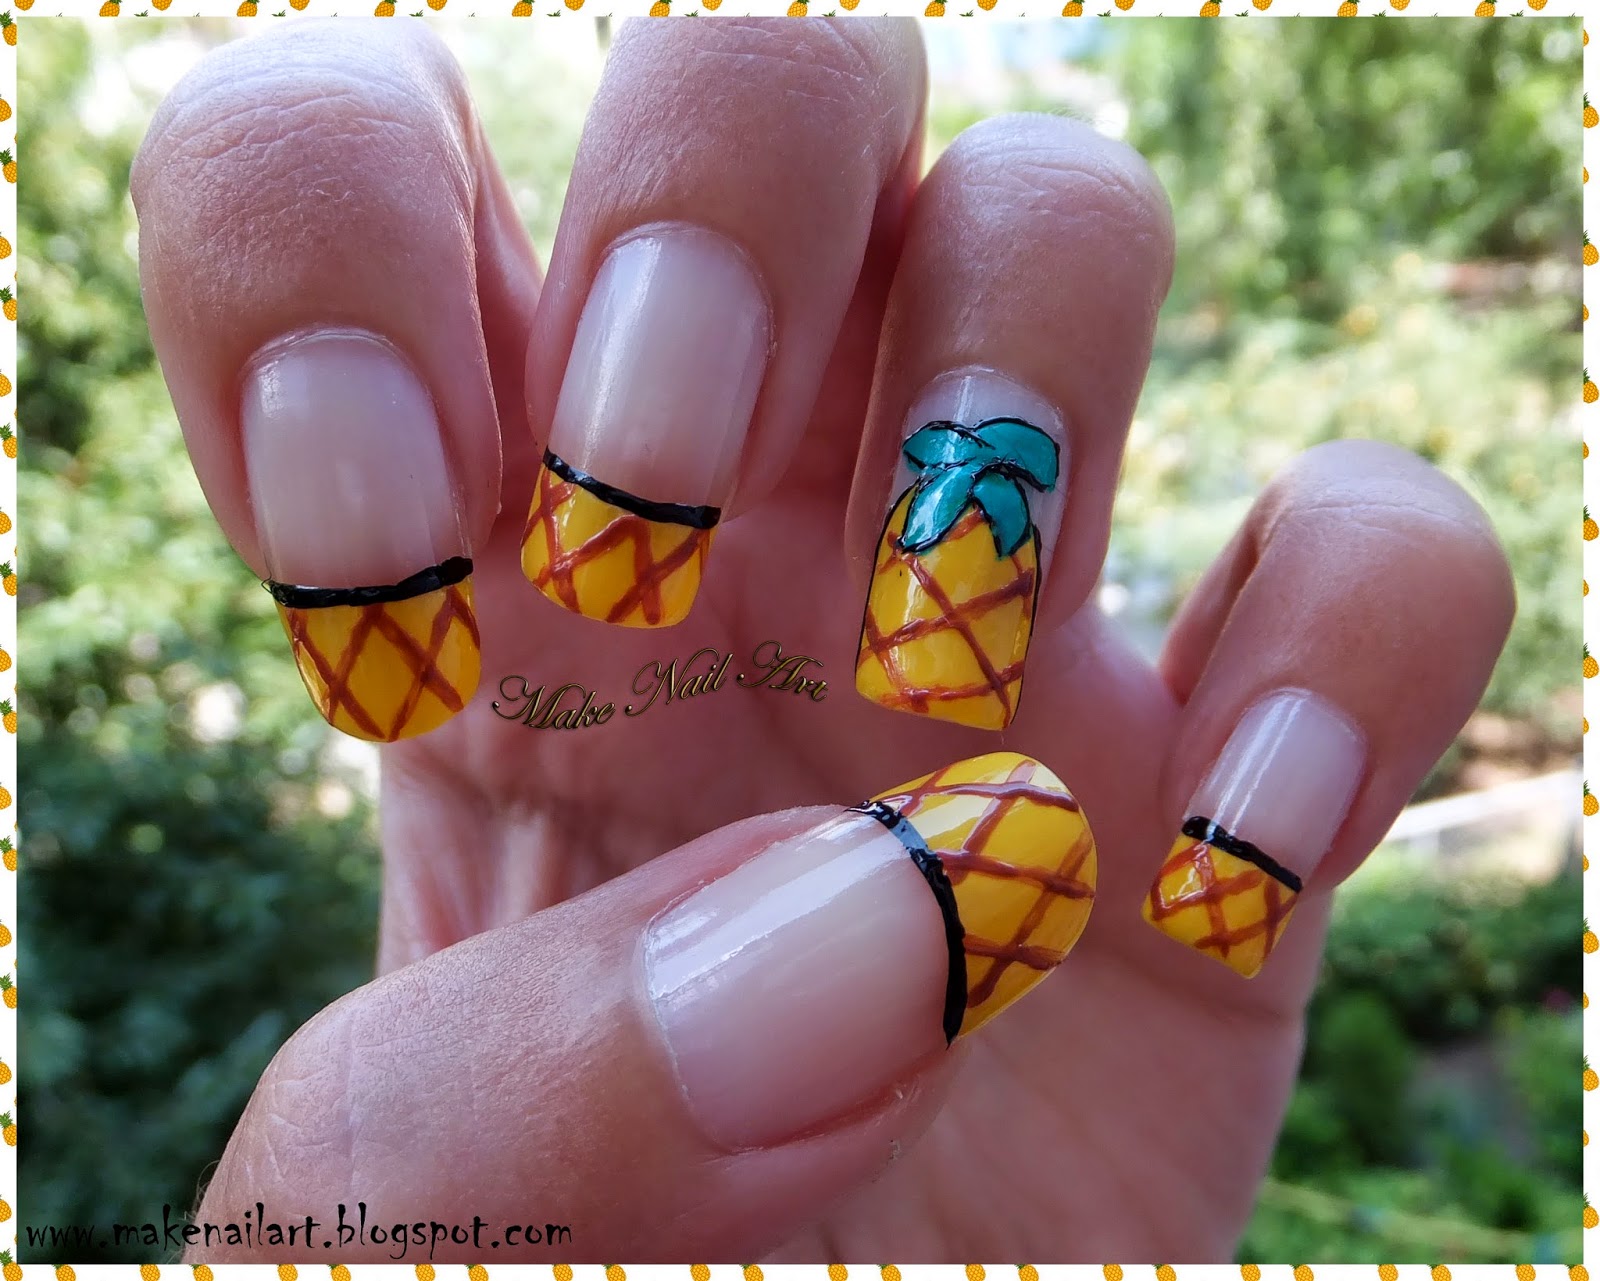 7. Pineapple Nail Art Design - wide 4